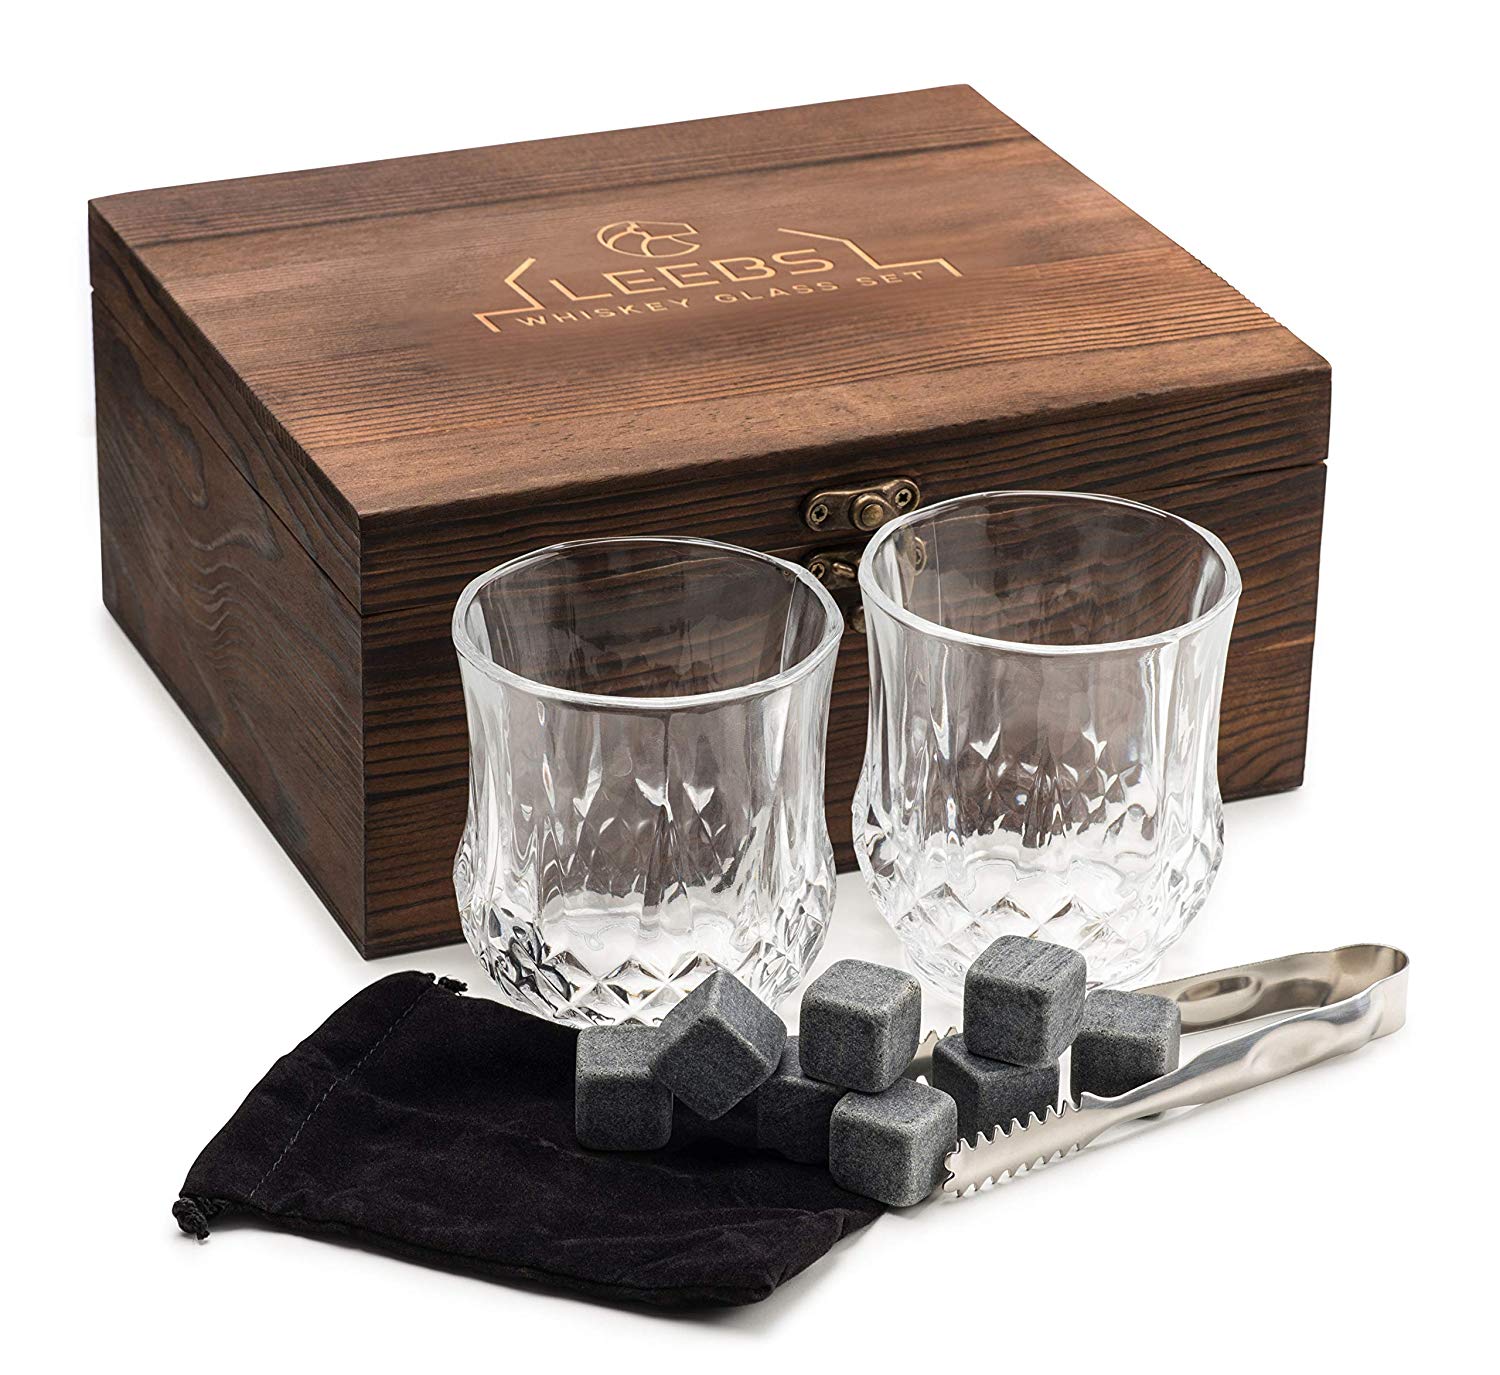 LEEBS Premium Whiskey Stones Gift Set Review